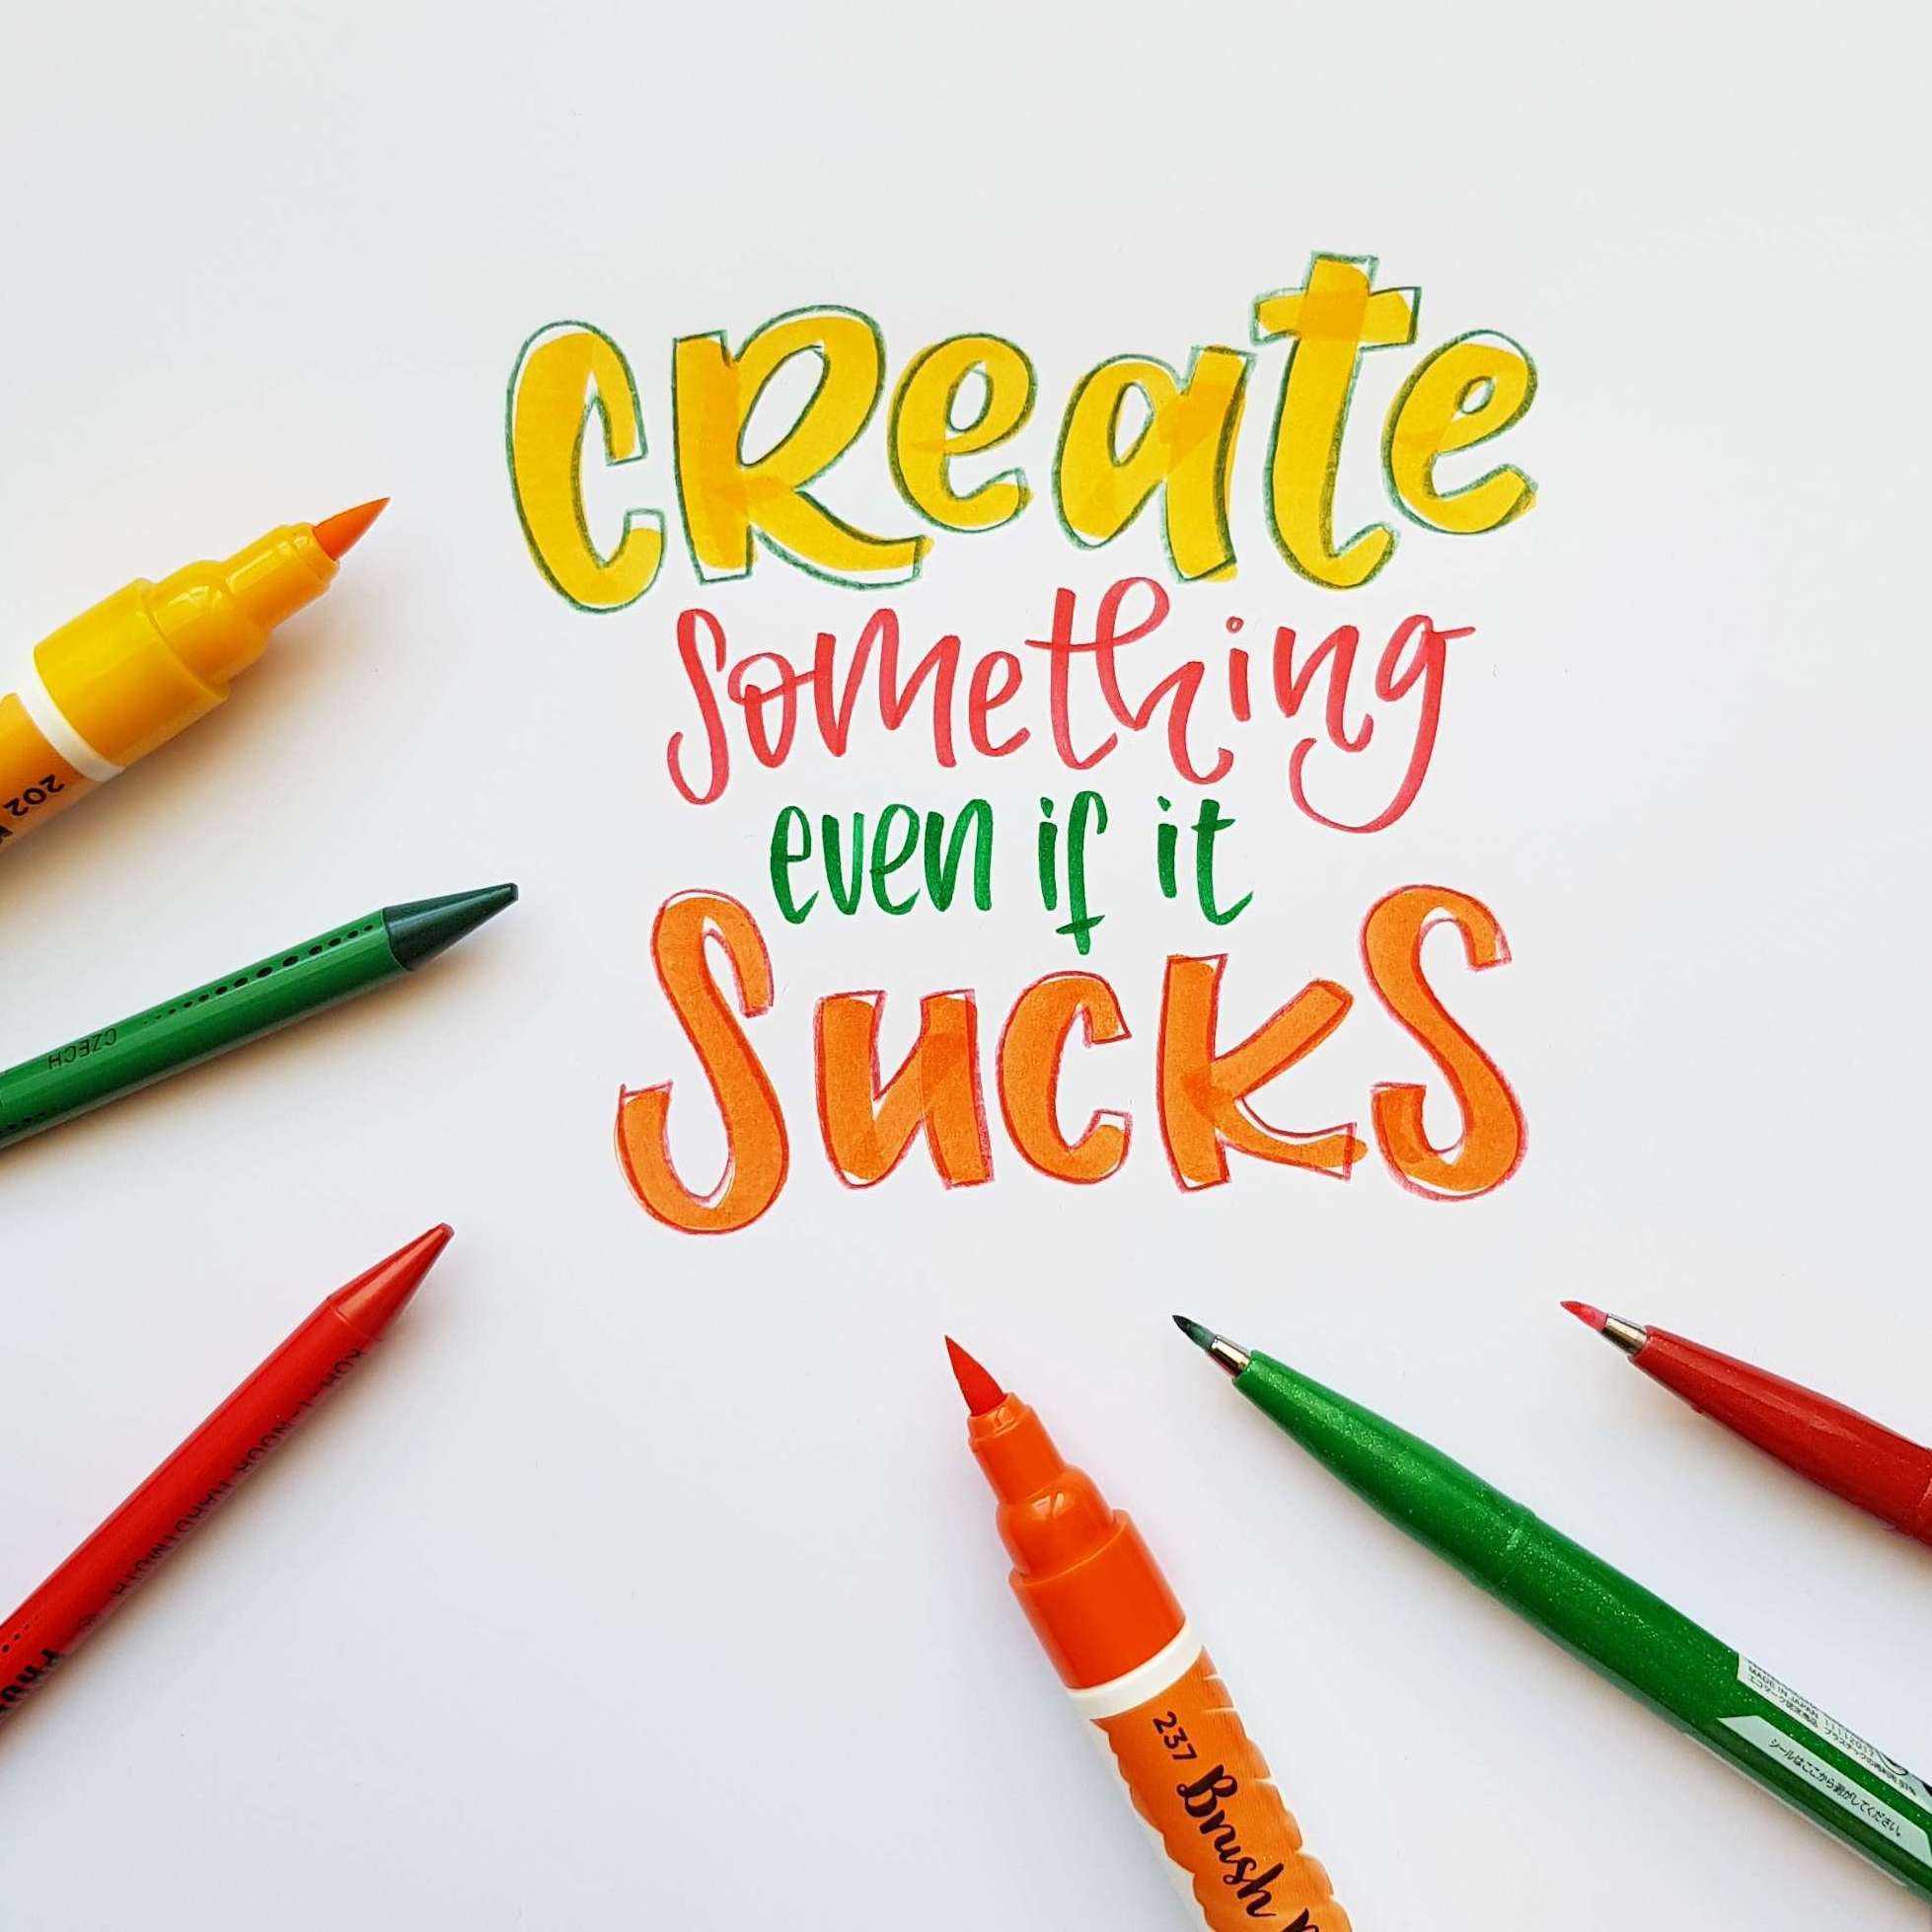 Create something even if it sucks